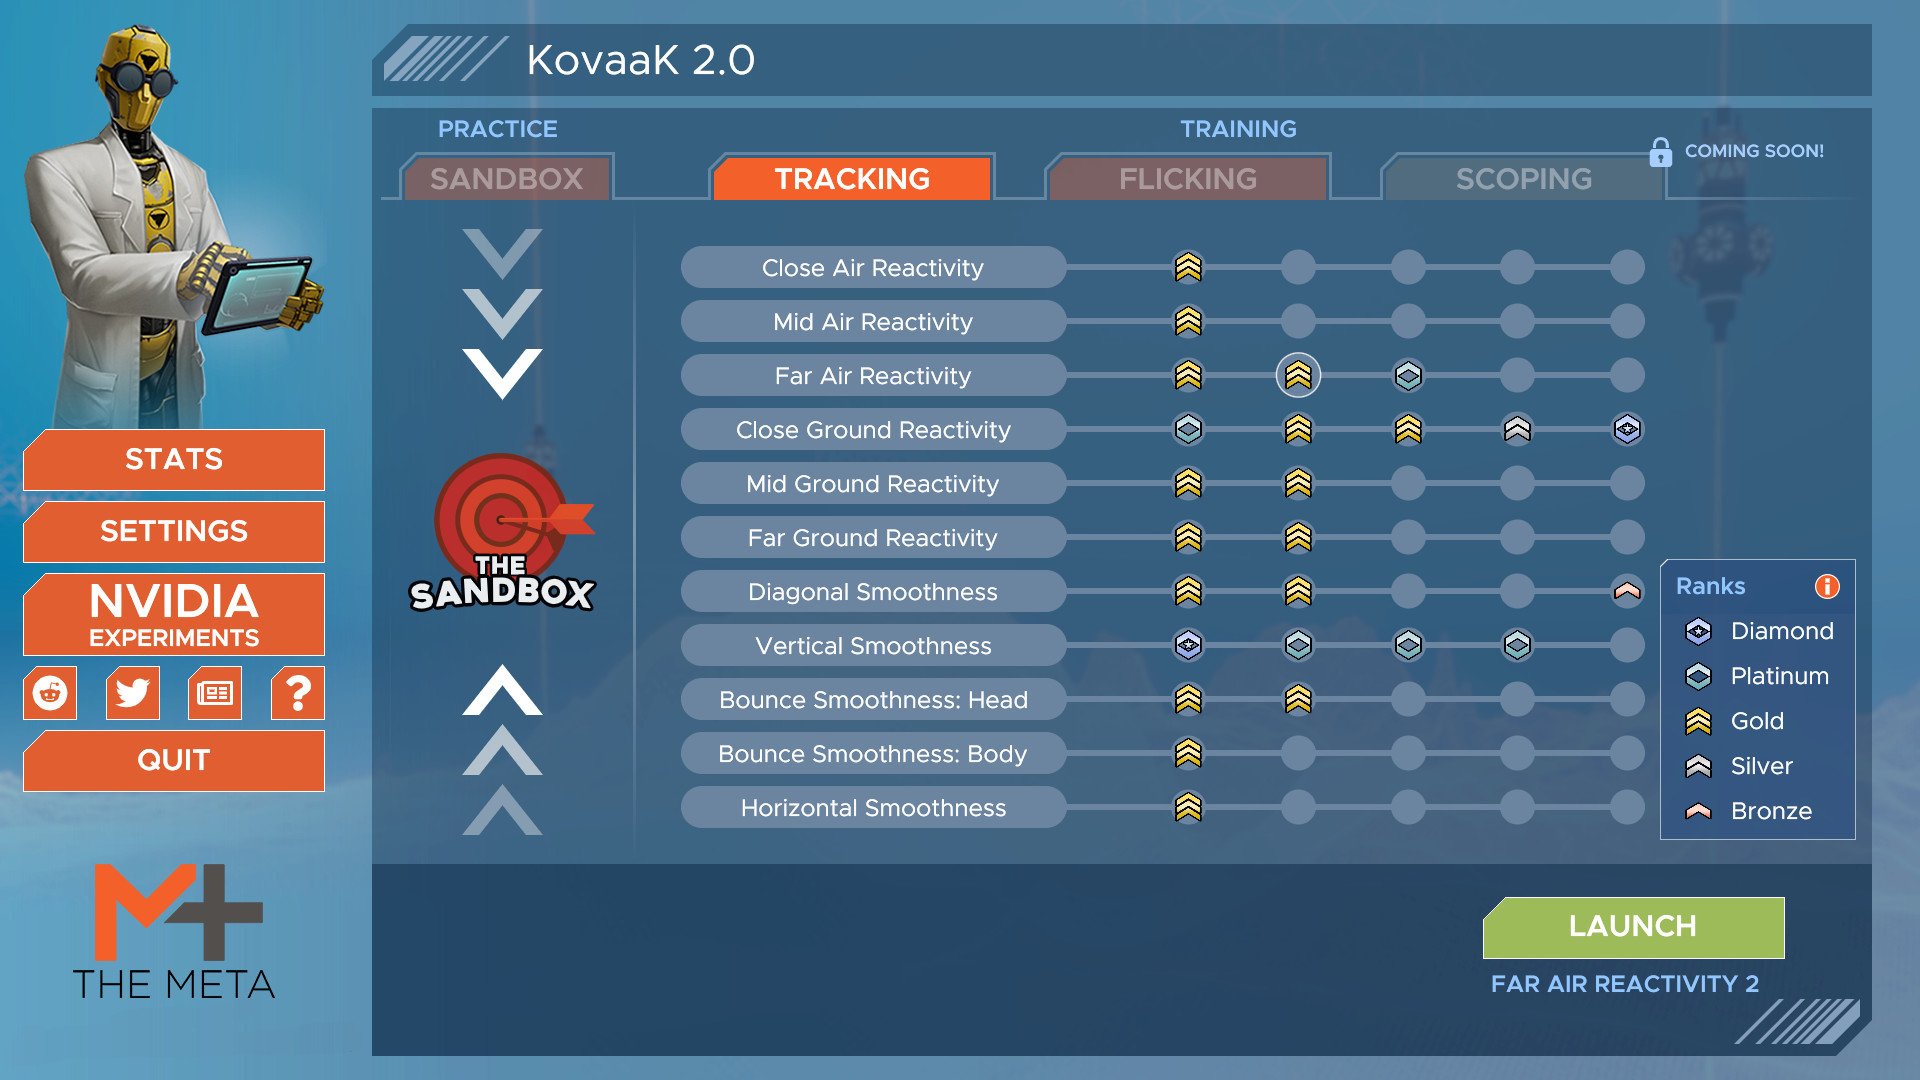 KovaaK's Tracking Trainer 2